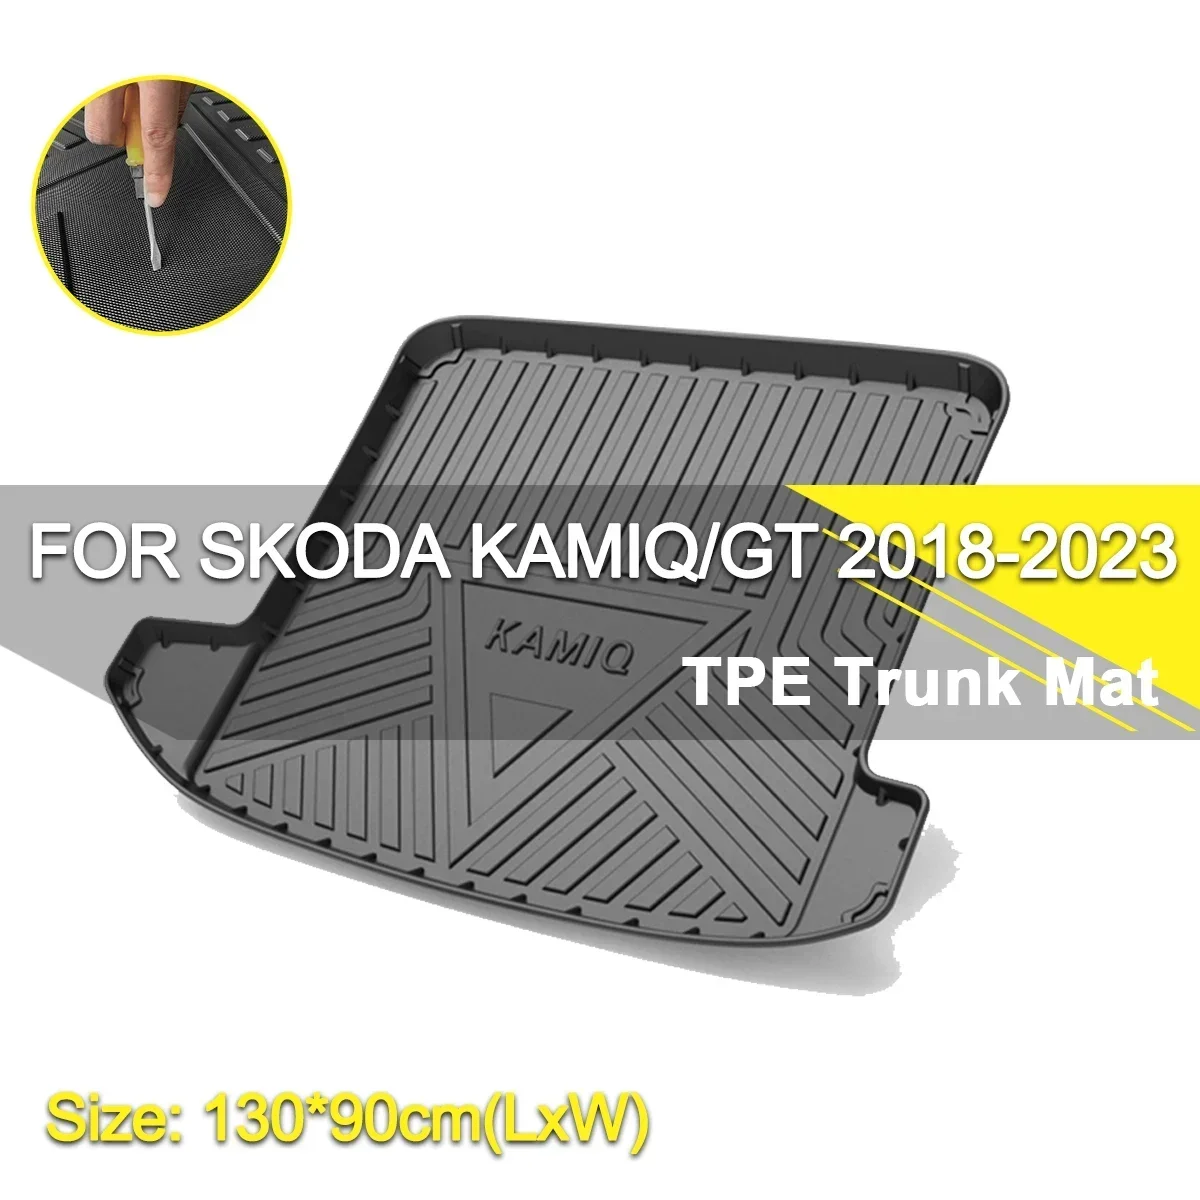 

Car Rear Trunk Cover Mat Waterproof Non-Slip Rubber TPE Cargo Liner Accessories For Skoda KAMIQ/KAMIQ GT 2018-2023